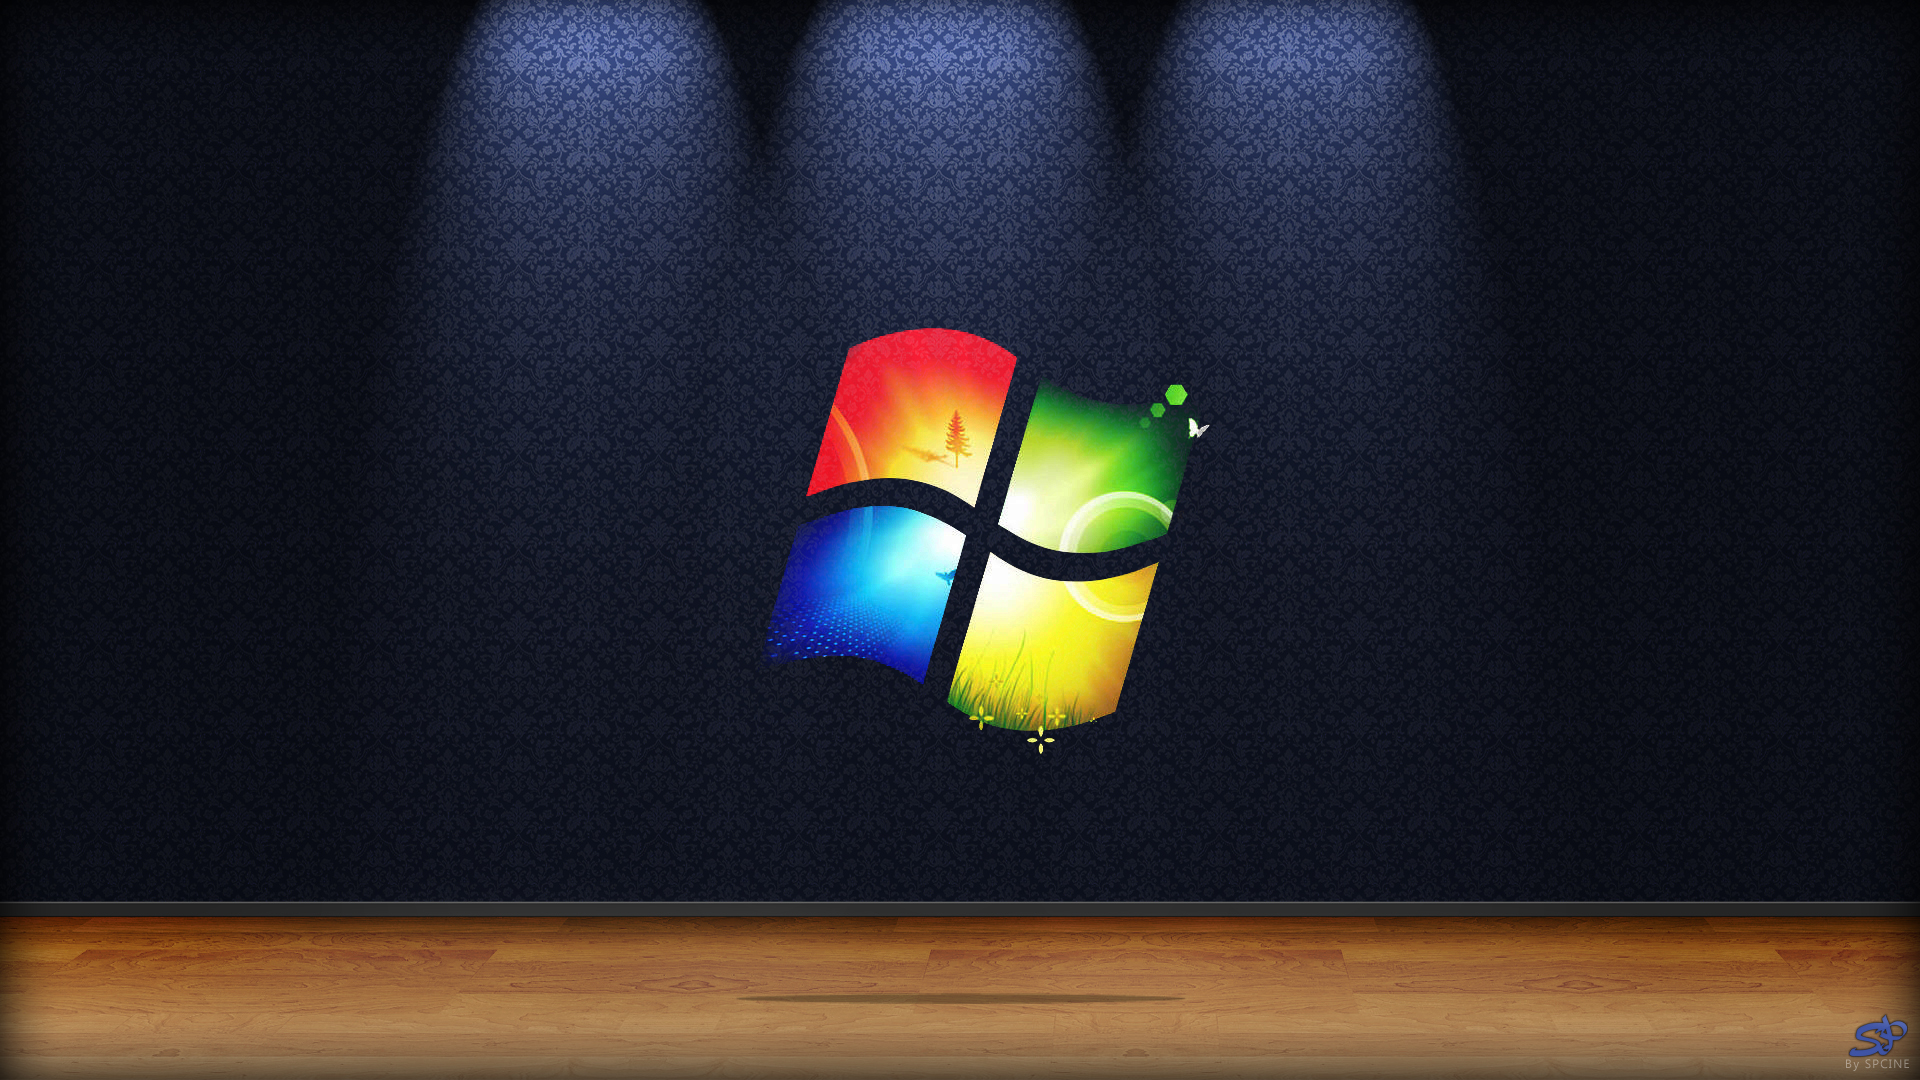 Windows 7 Wallpaper by spcine on DeviantArt